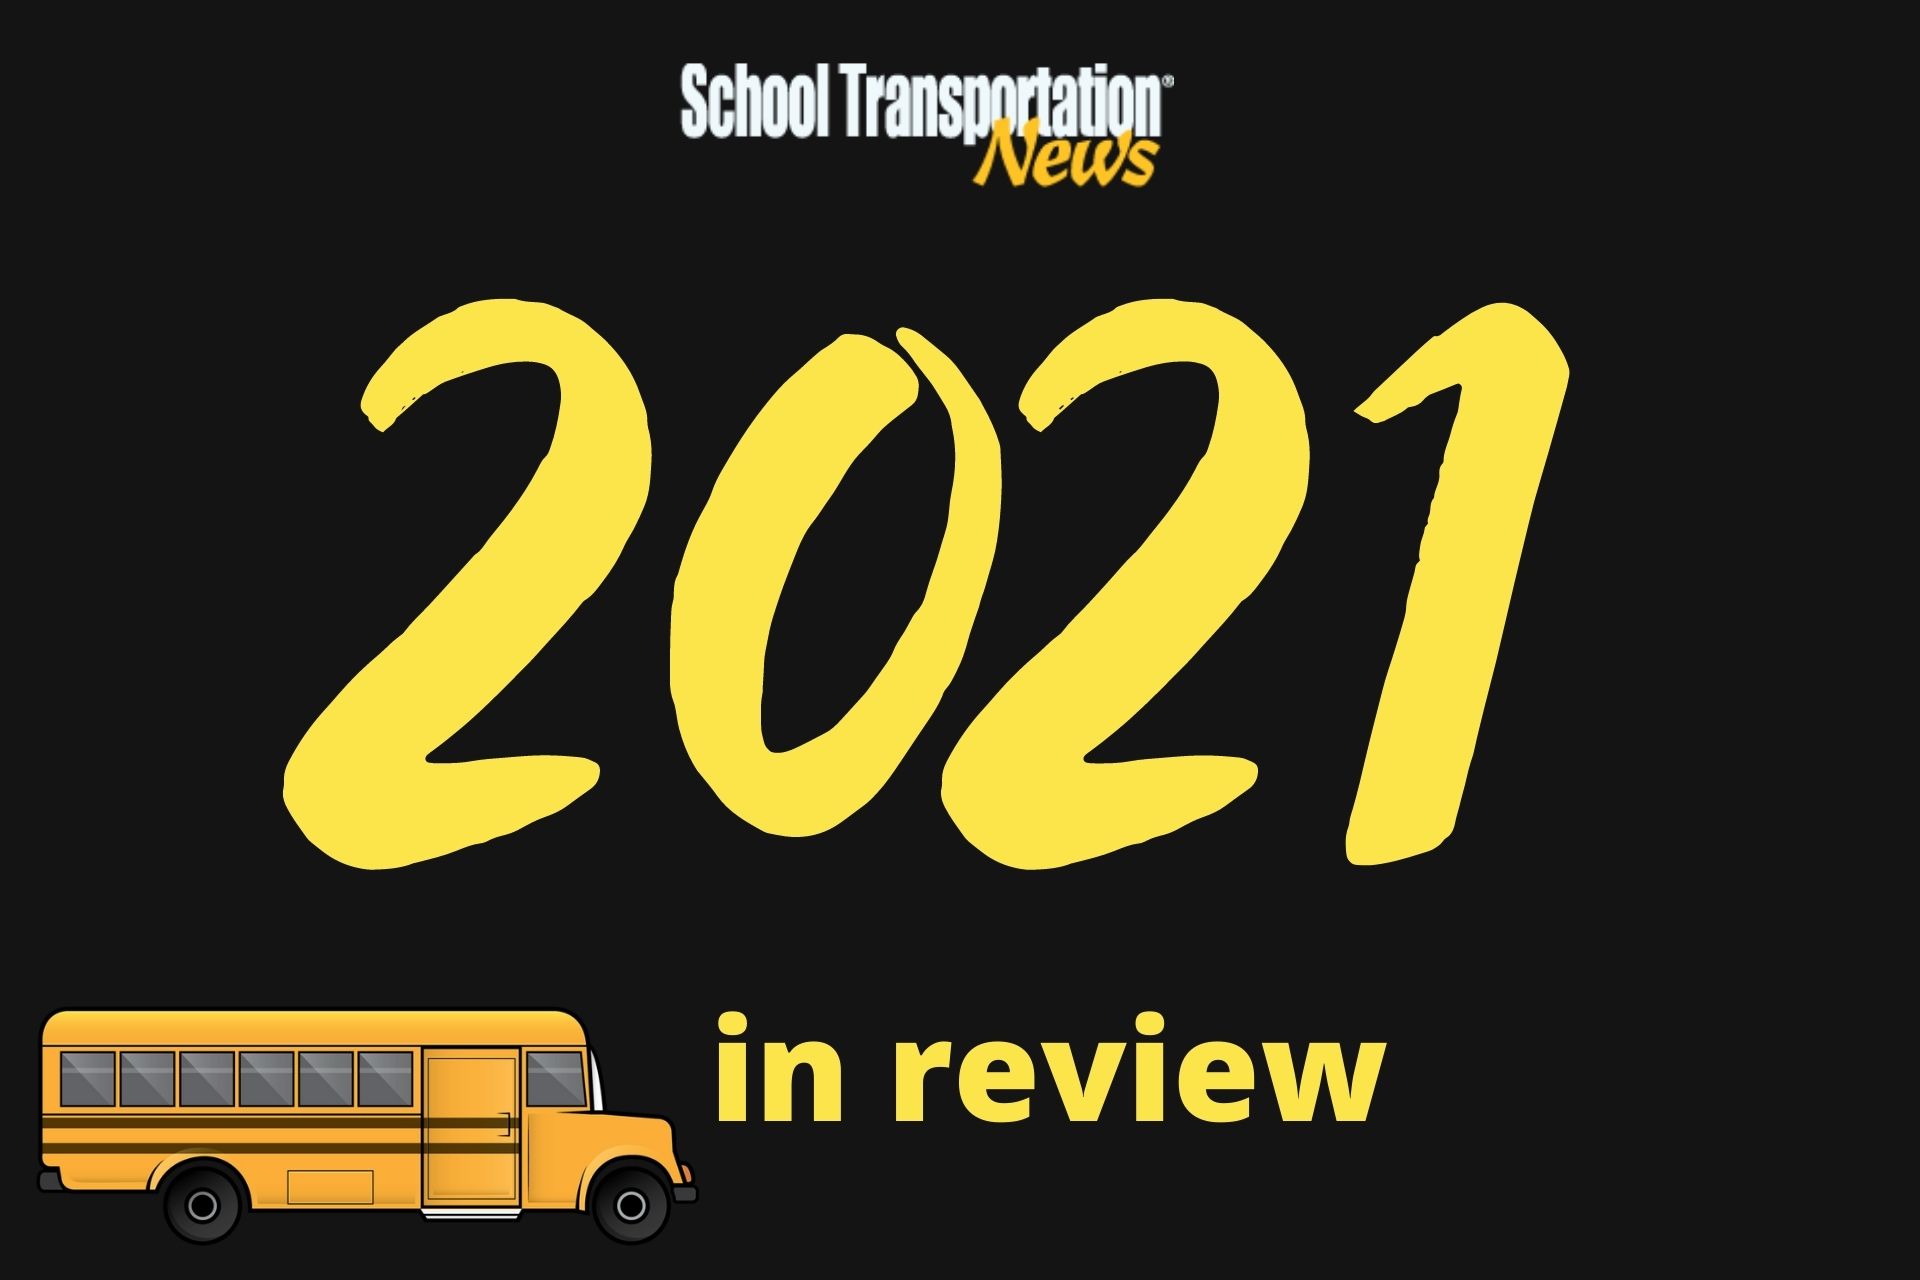 Top 10 School Travel News Magazine Articles of 2021